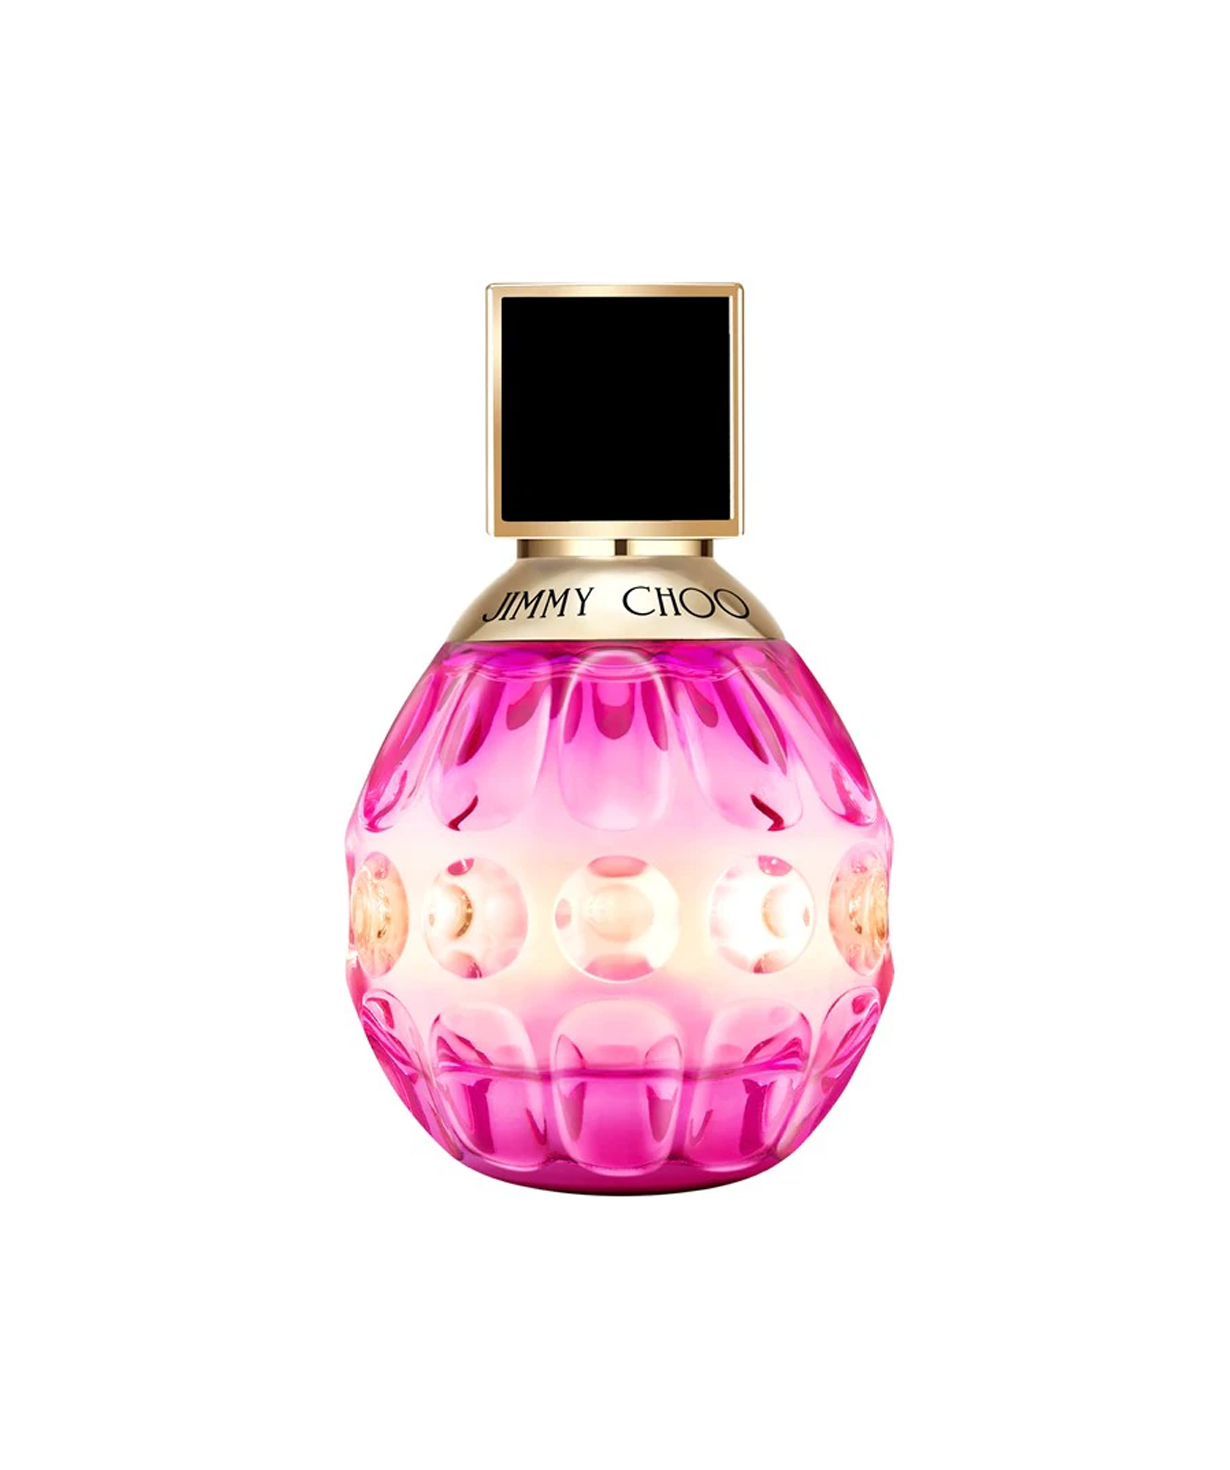 Perfume «Jimmy Choo» Rose Passion, for women, 100 ml